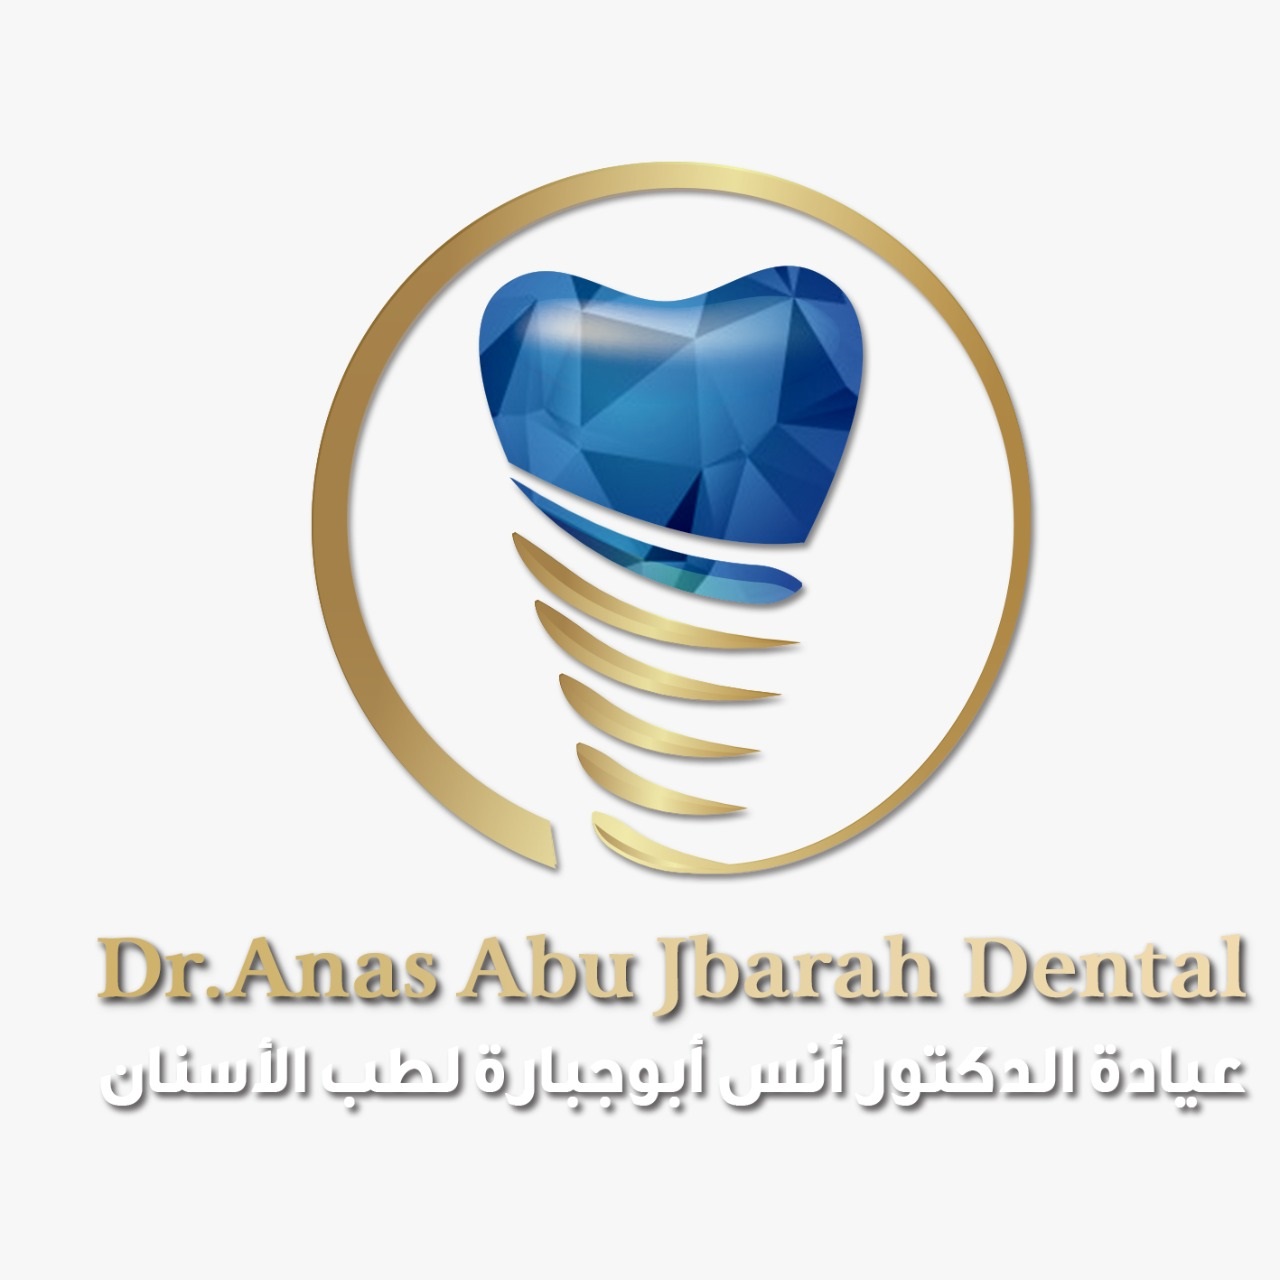 dr anas abu jbara logo